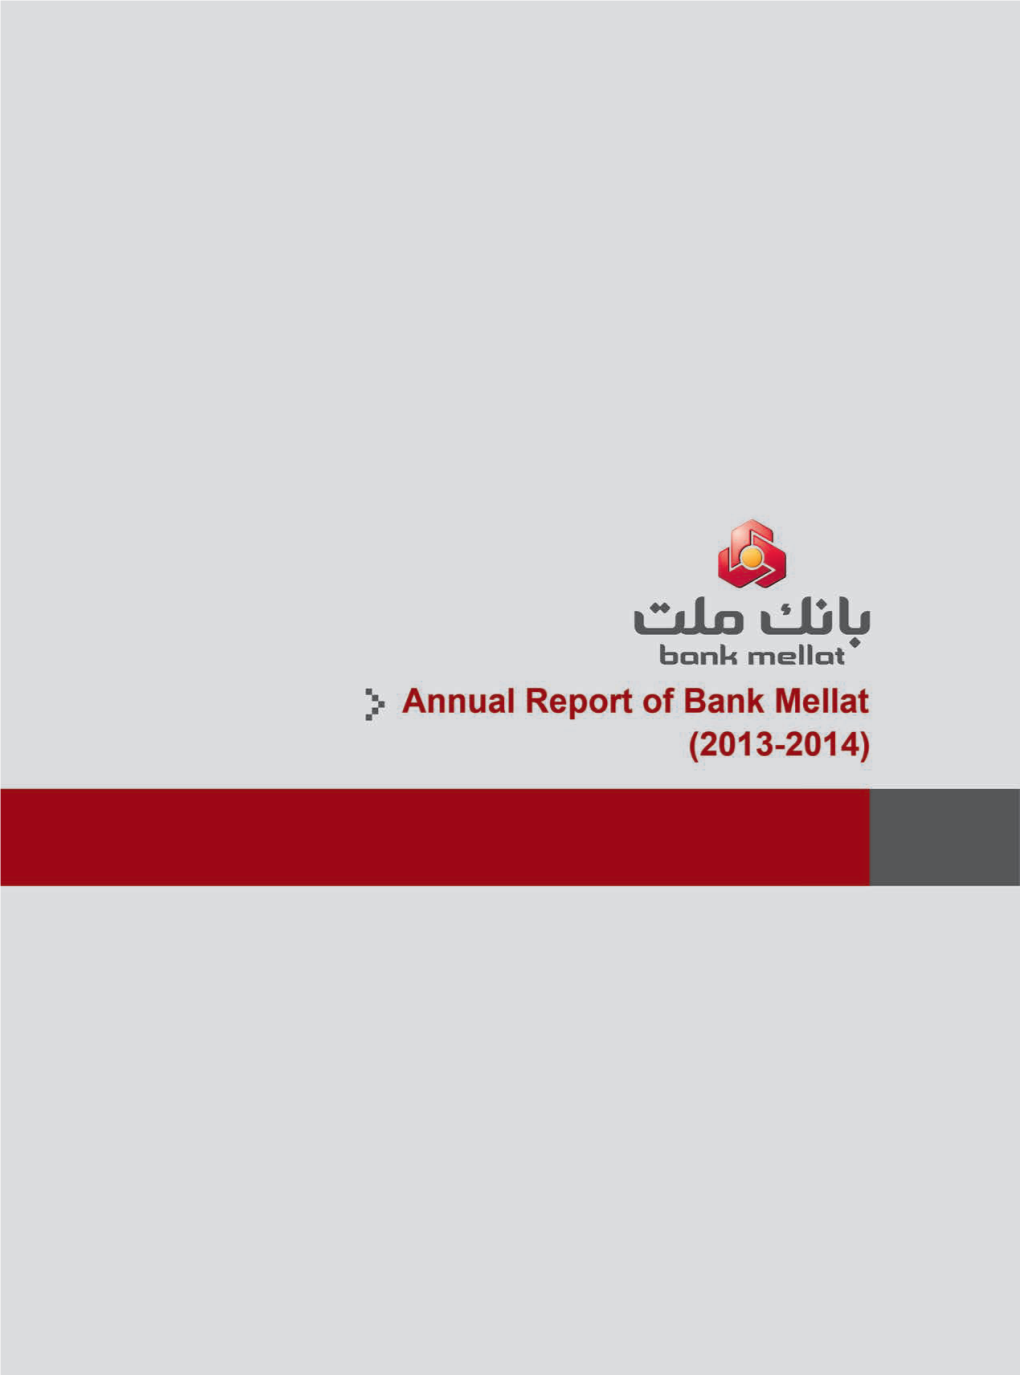 Annual Report of Bank Mellat 2013